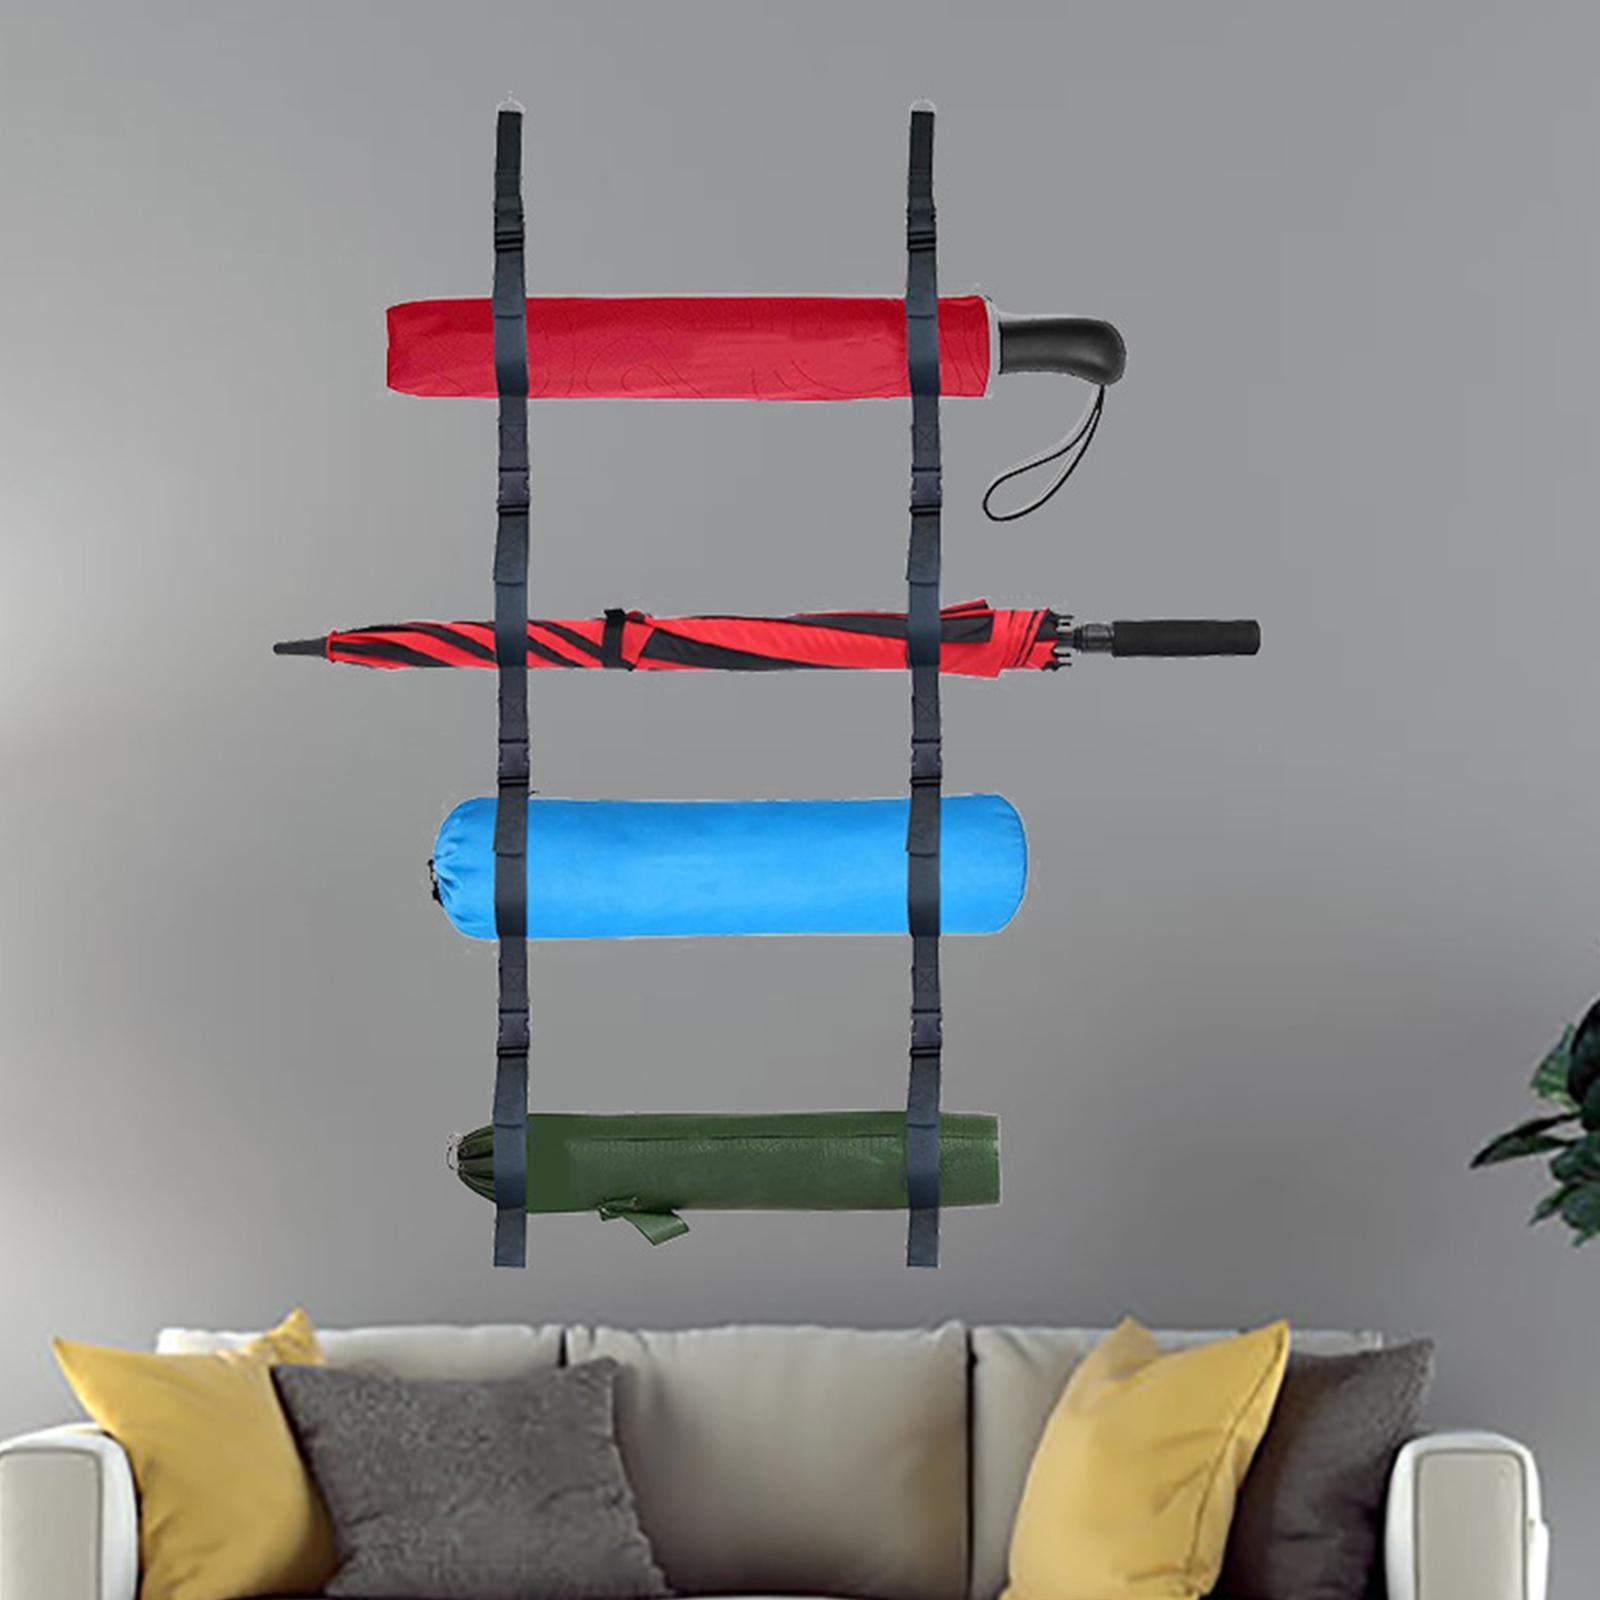 Garage Camping Chair Wall Storage Yoga Mat Holder Durable